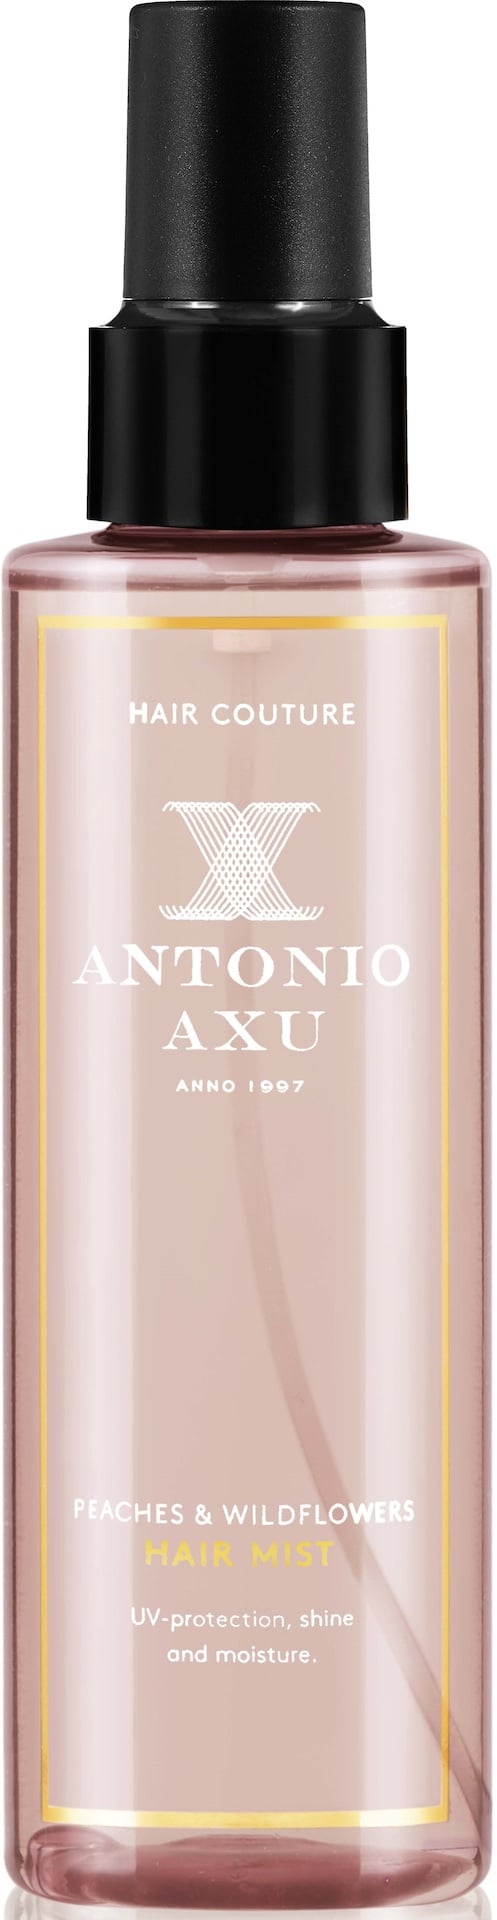 Antonio Axu Peaches and Wildflower Hair Mist 150ml